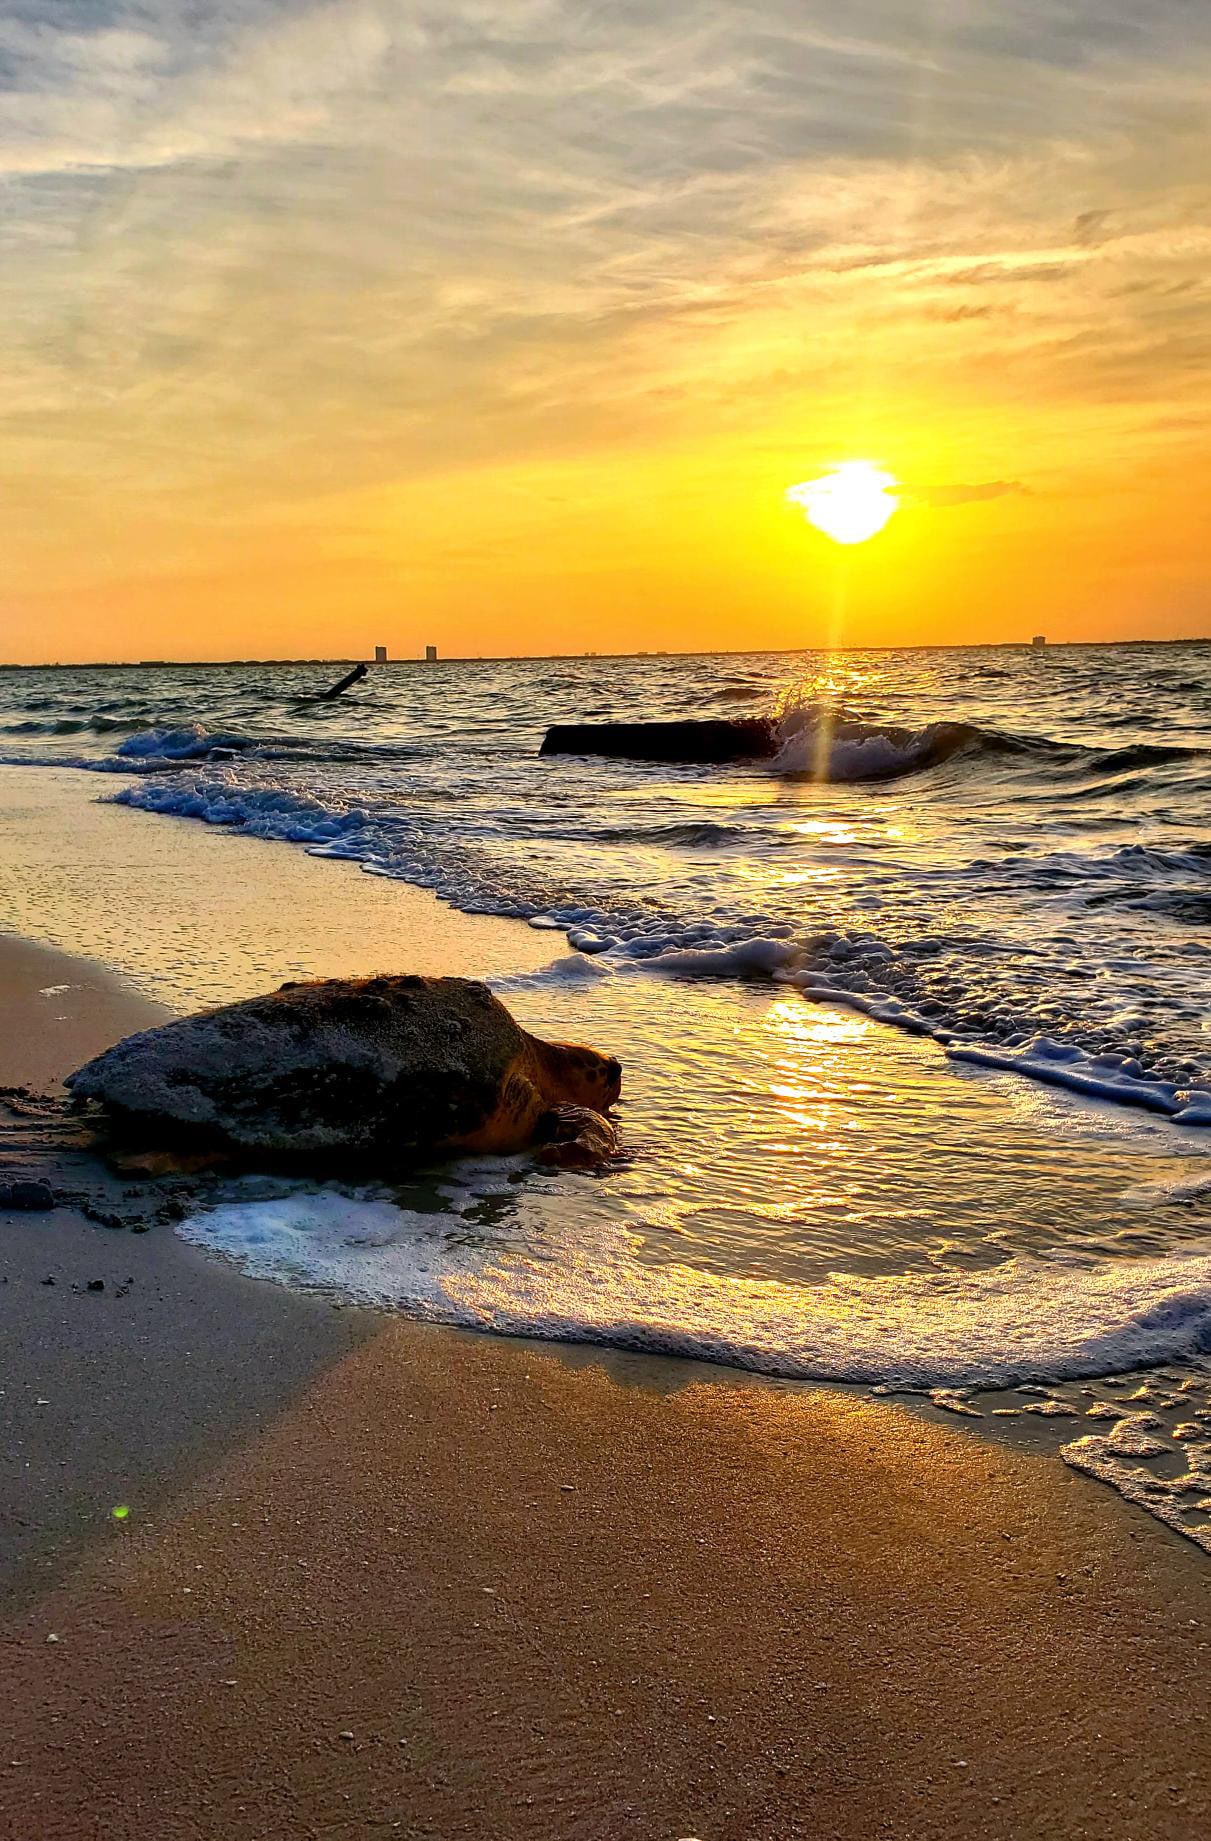 sea turtle returning to ocean